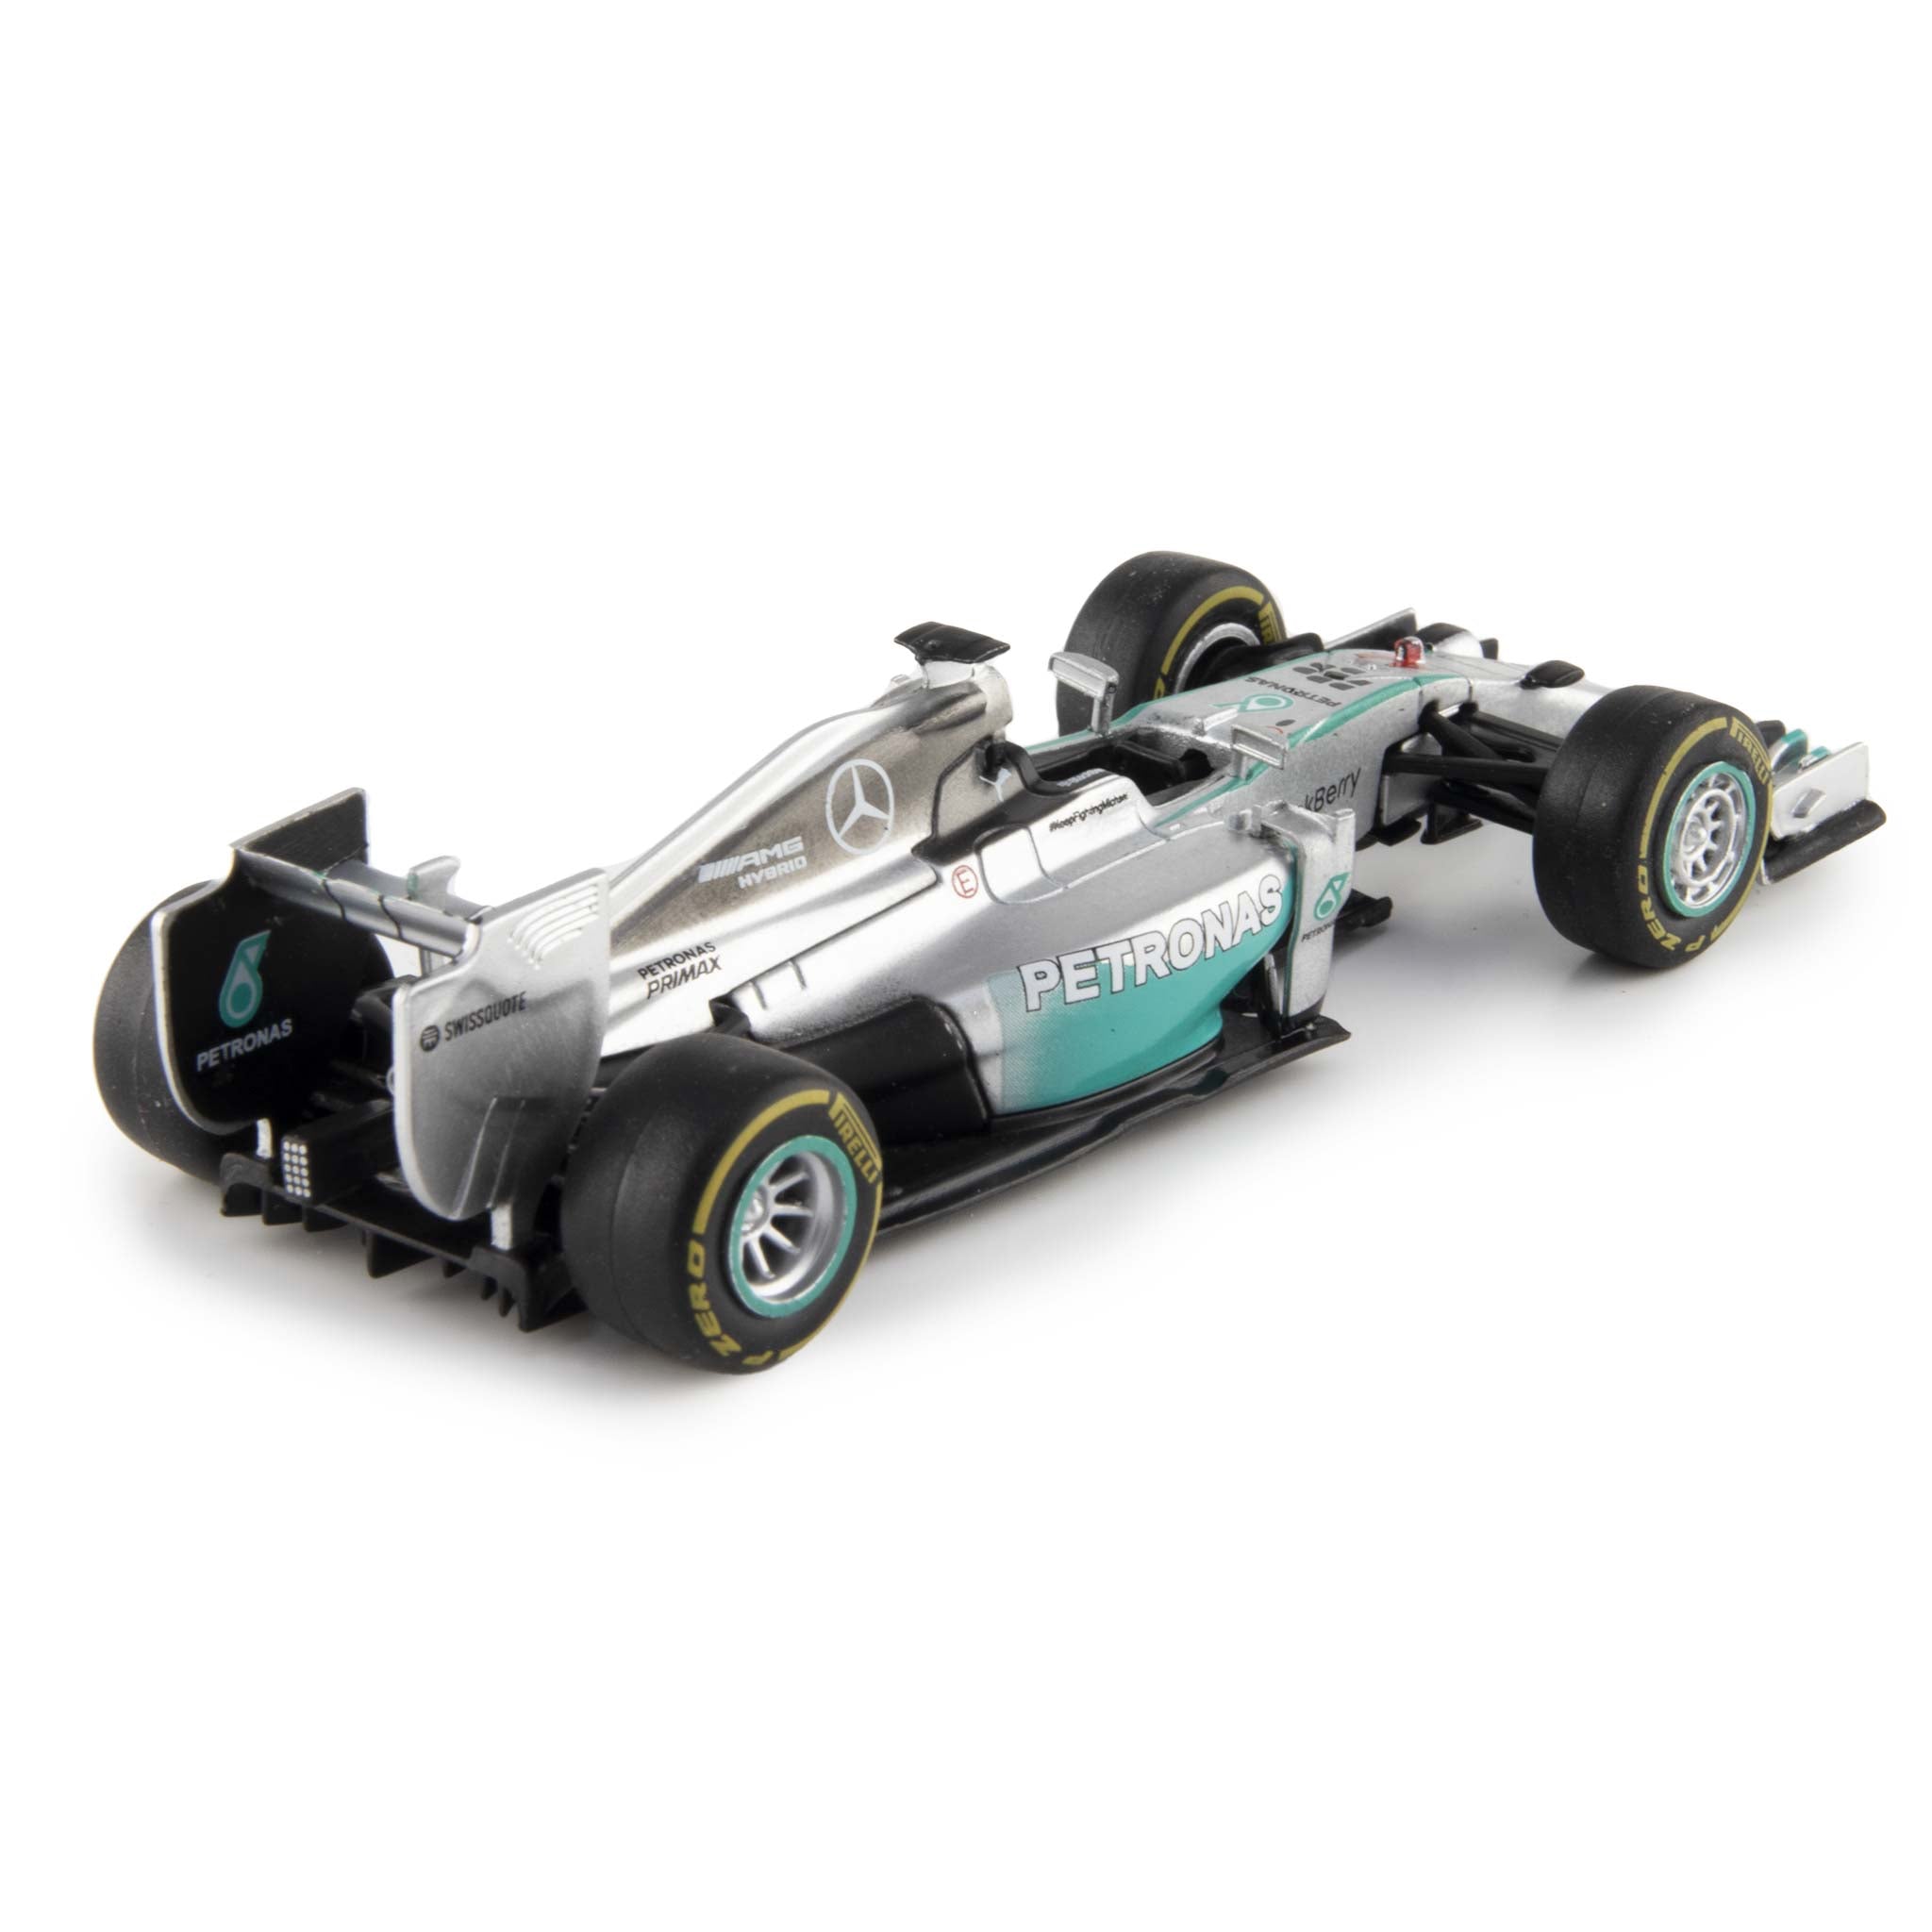 Mercedes F1 W05 Hybrid #44 2014 Hamilton - 1:43 Scale Diecast Model Car-Unbranded-Diecast Model Centre